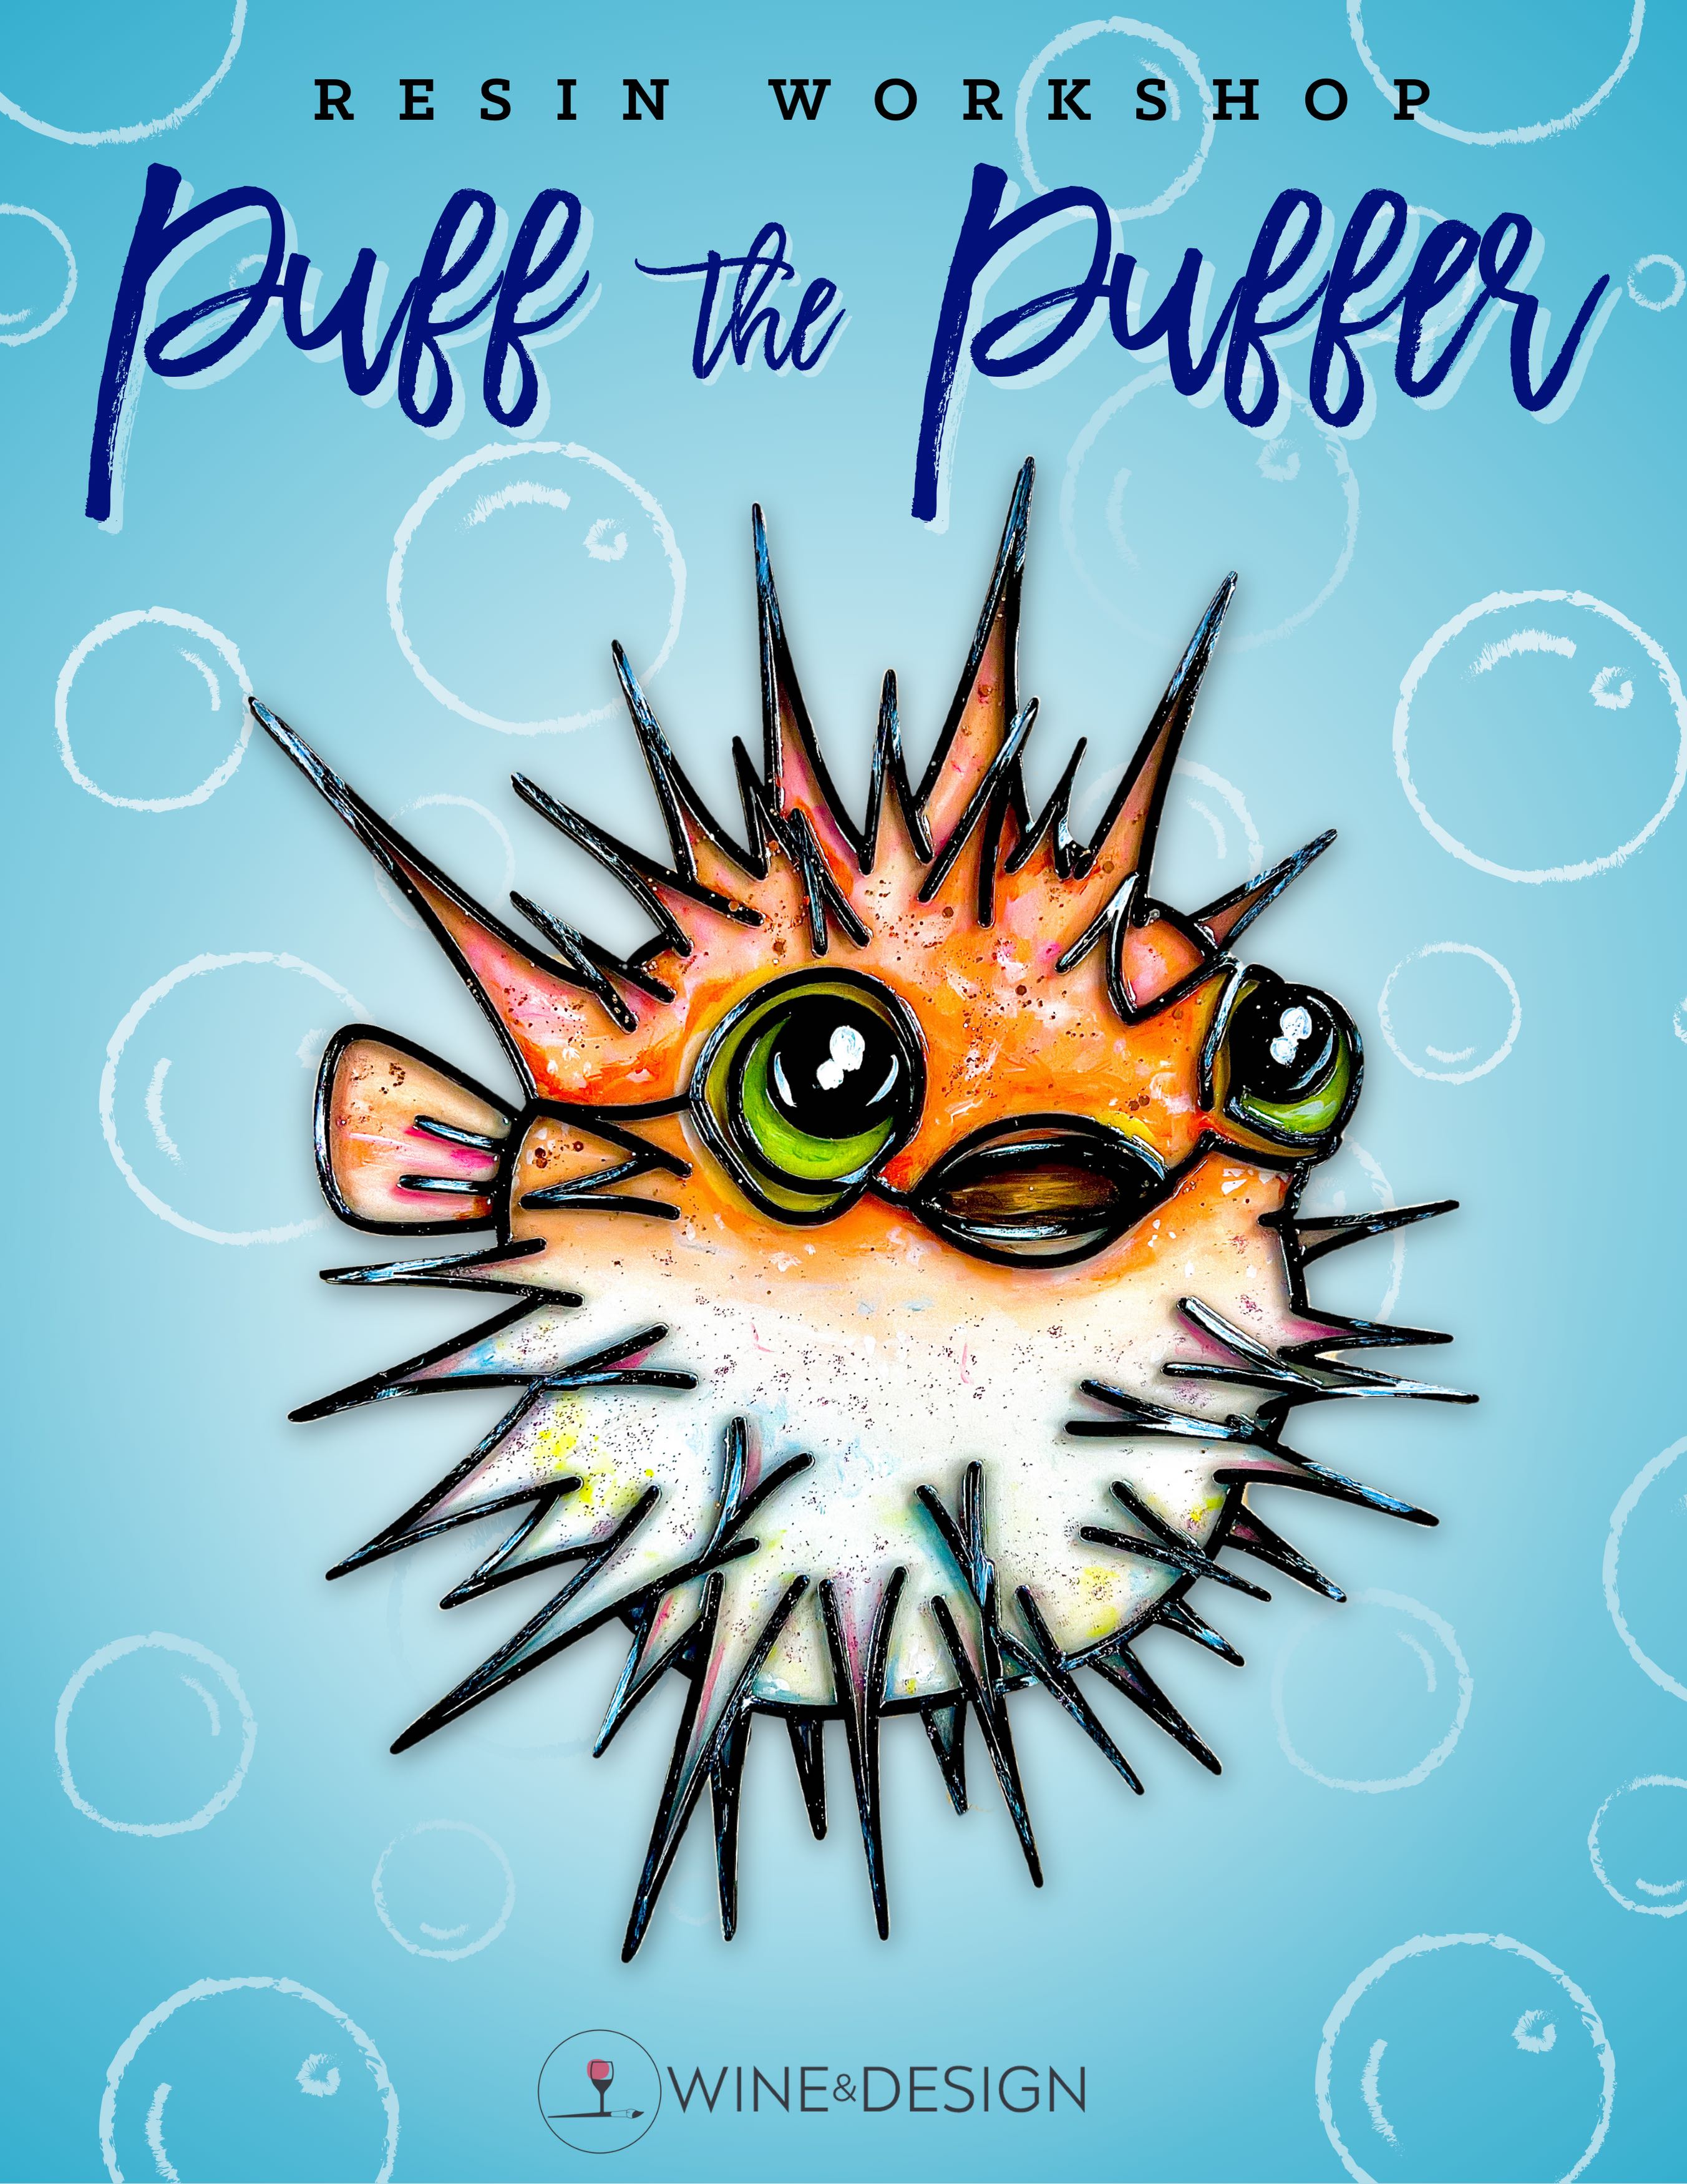 Puff the Pufferfish Resin Workshop